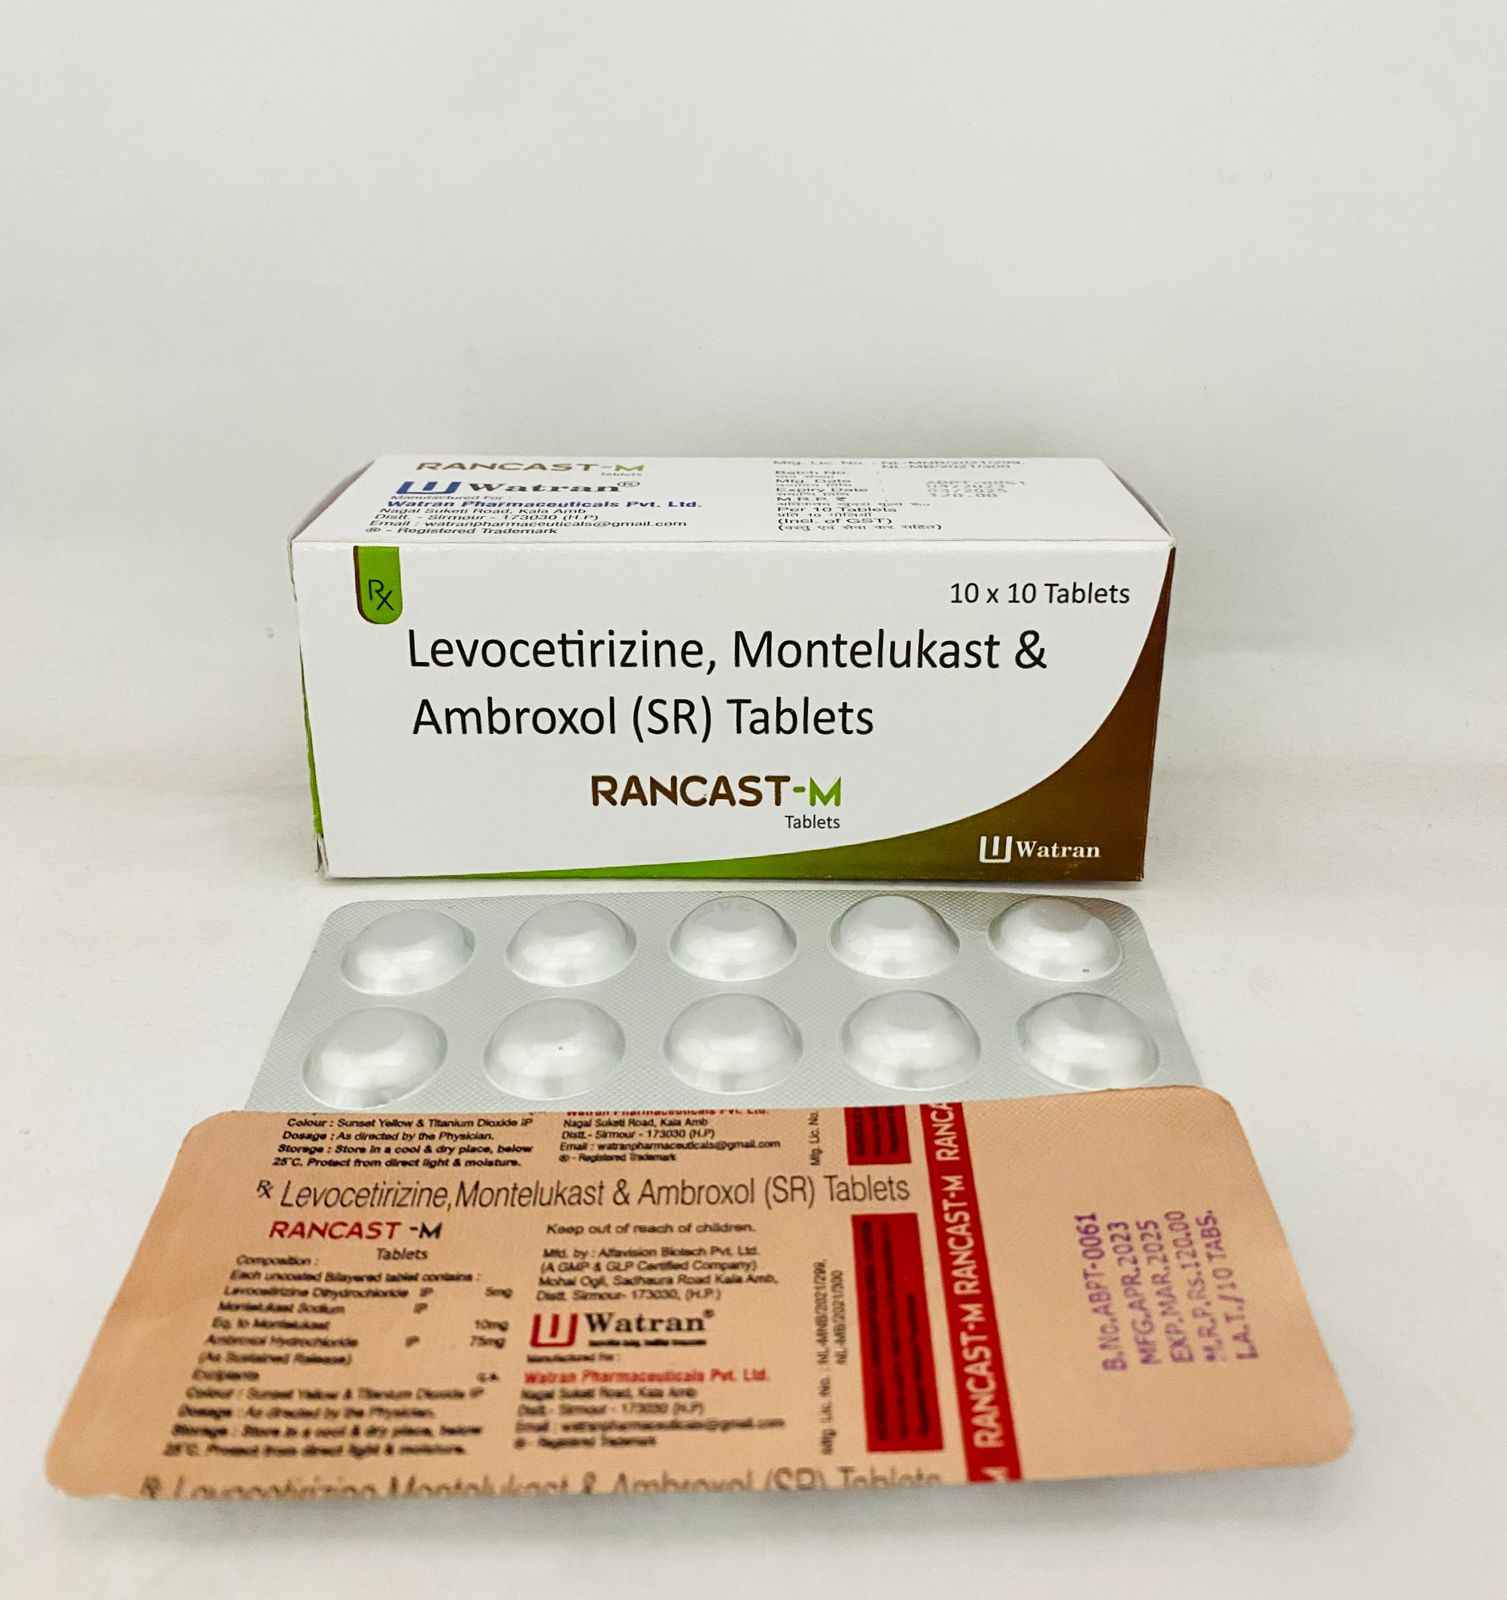 Levocetirizine Hydrochloride 5 mg + Ambroxol Hydrochloride 60 mg + Montelukast 10 mg